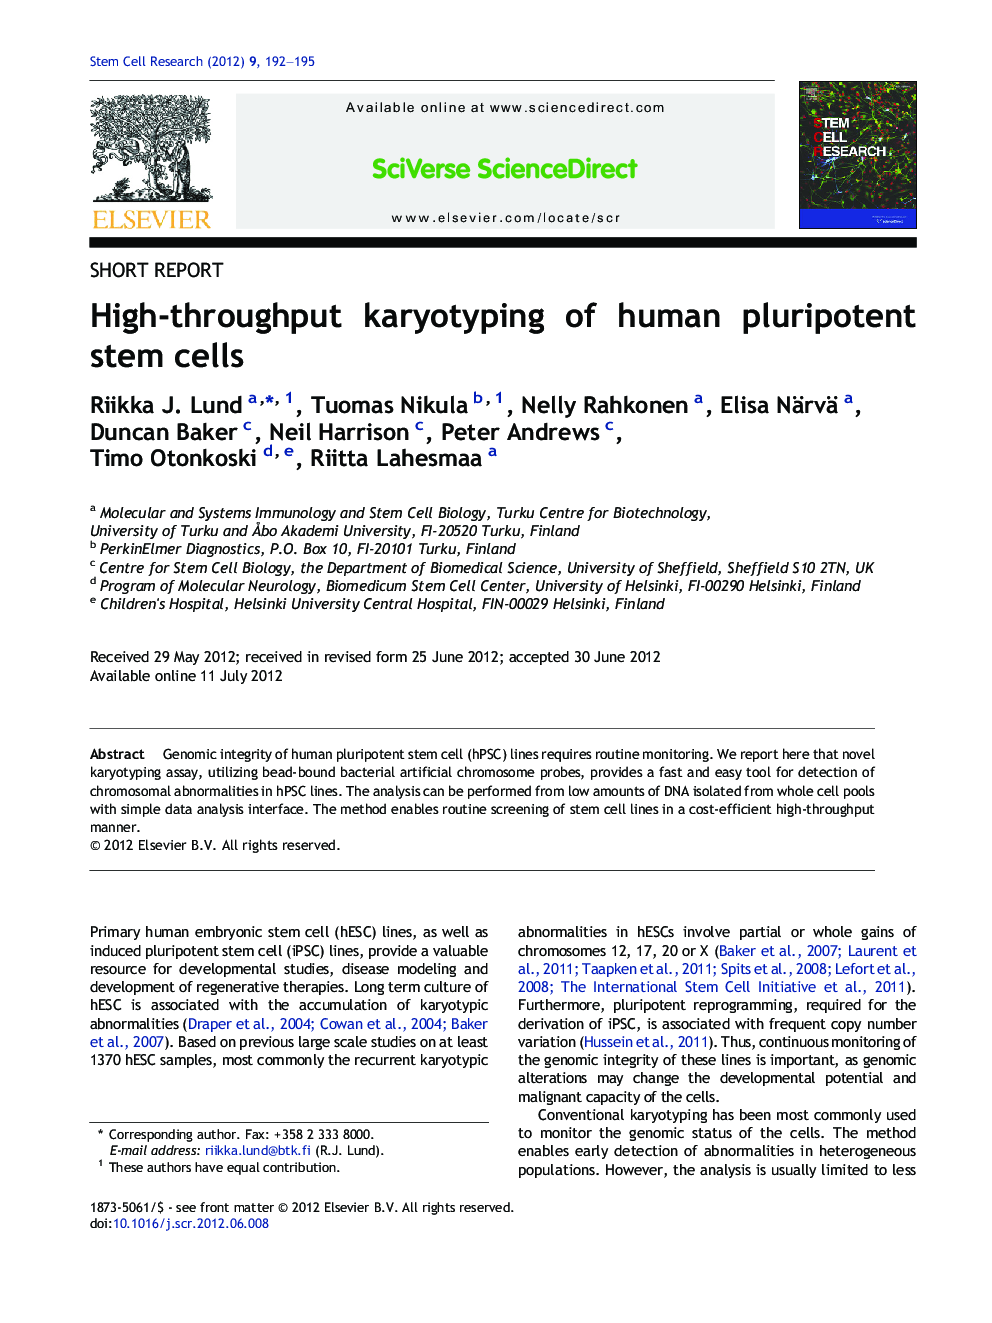 High-throughput karyotyping of human pluripotent stem cells